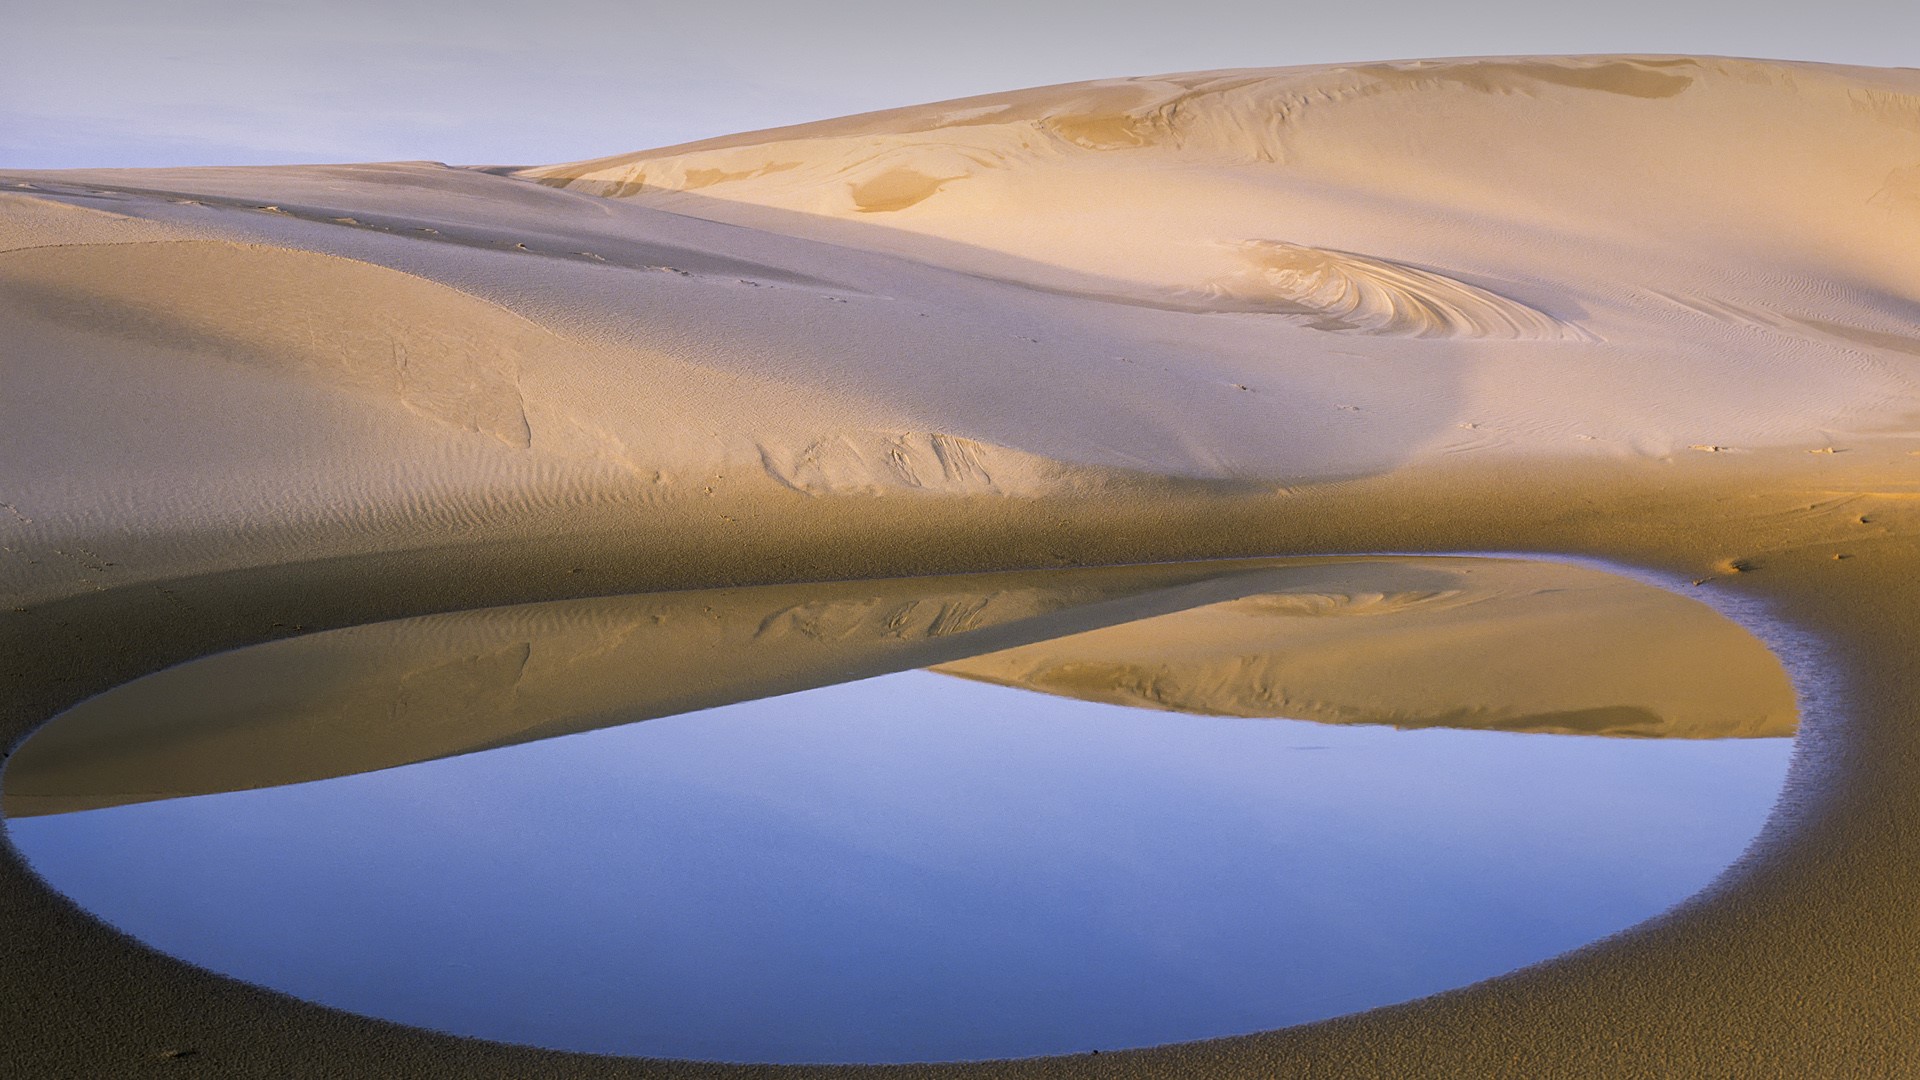 General 1920x1080 landscape desert nature water reflection pond oasis sand